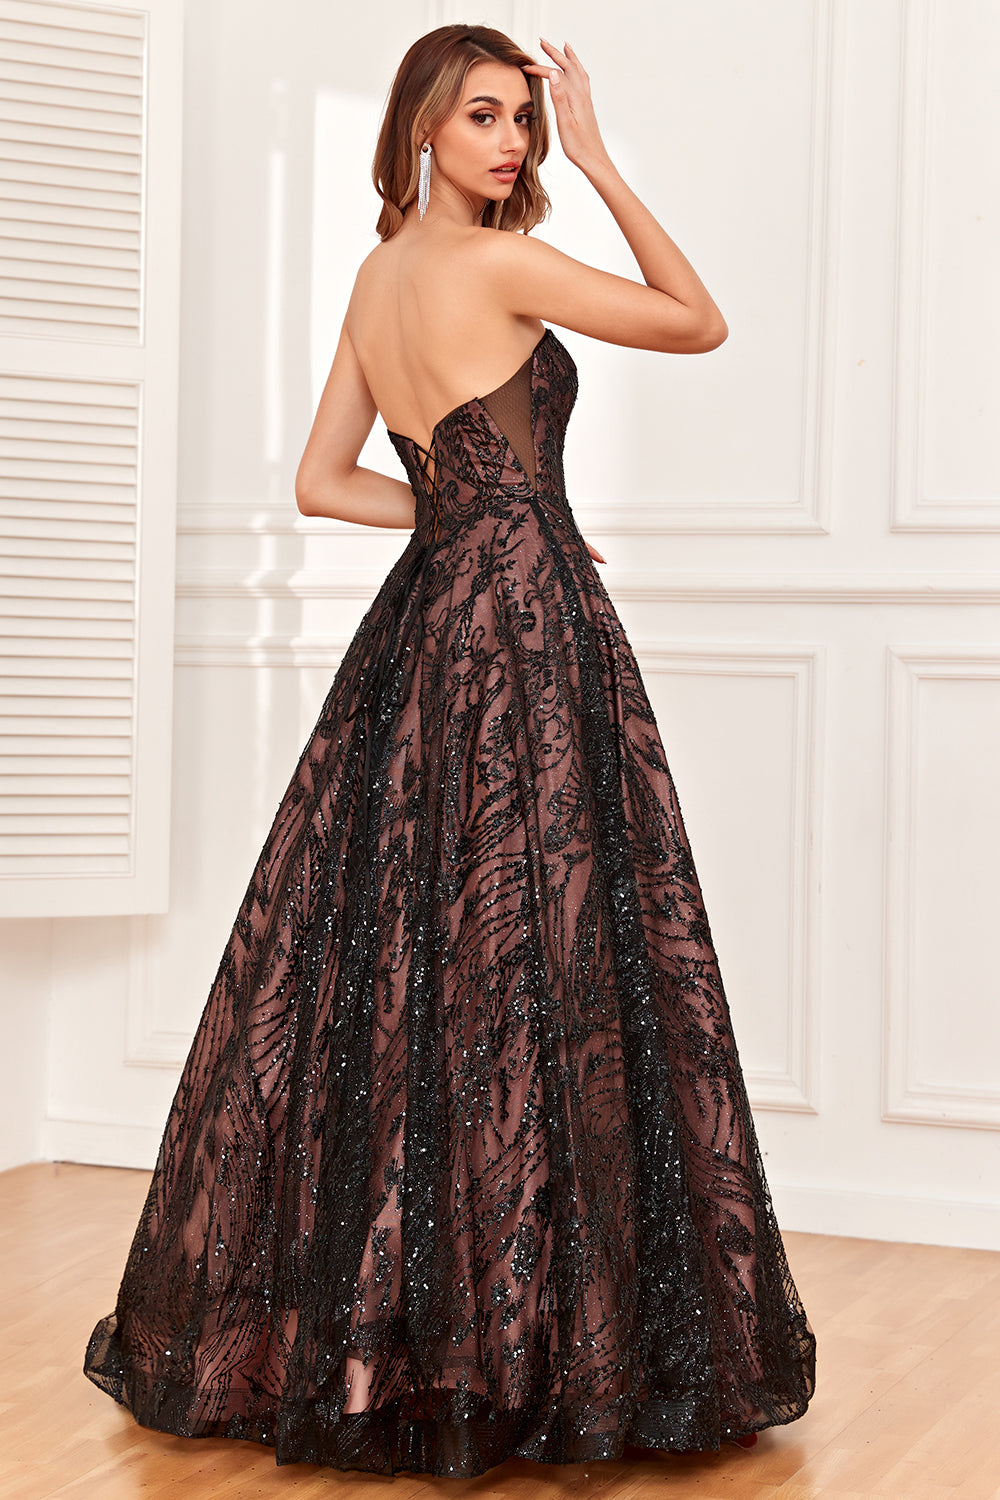 Dazzling Black Strapless Corset Back Long Formal Dress